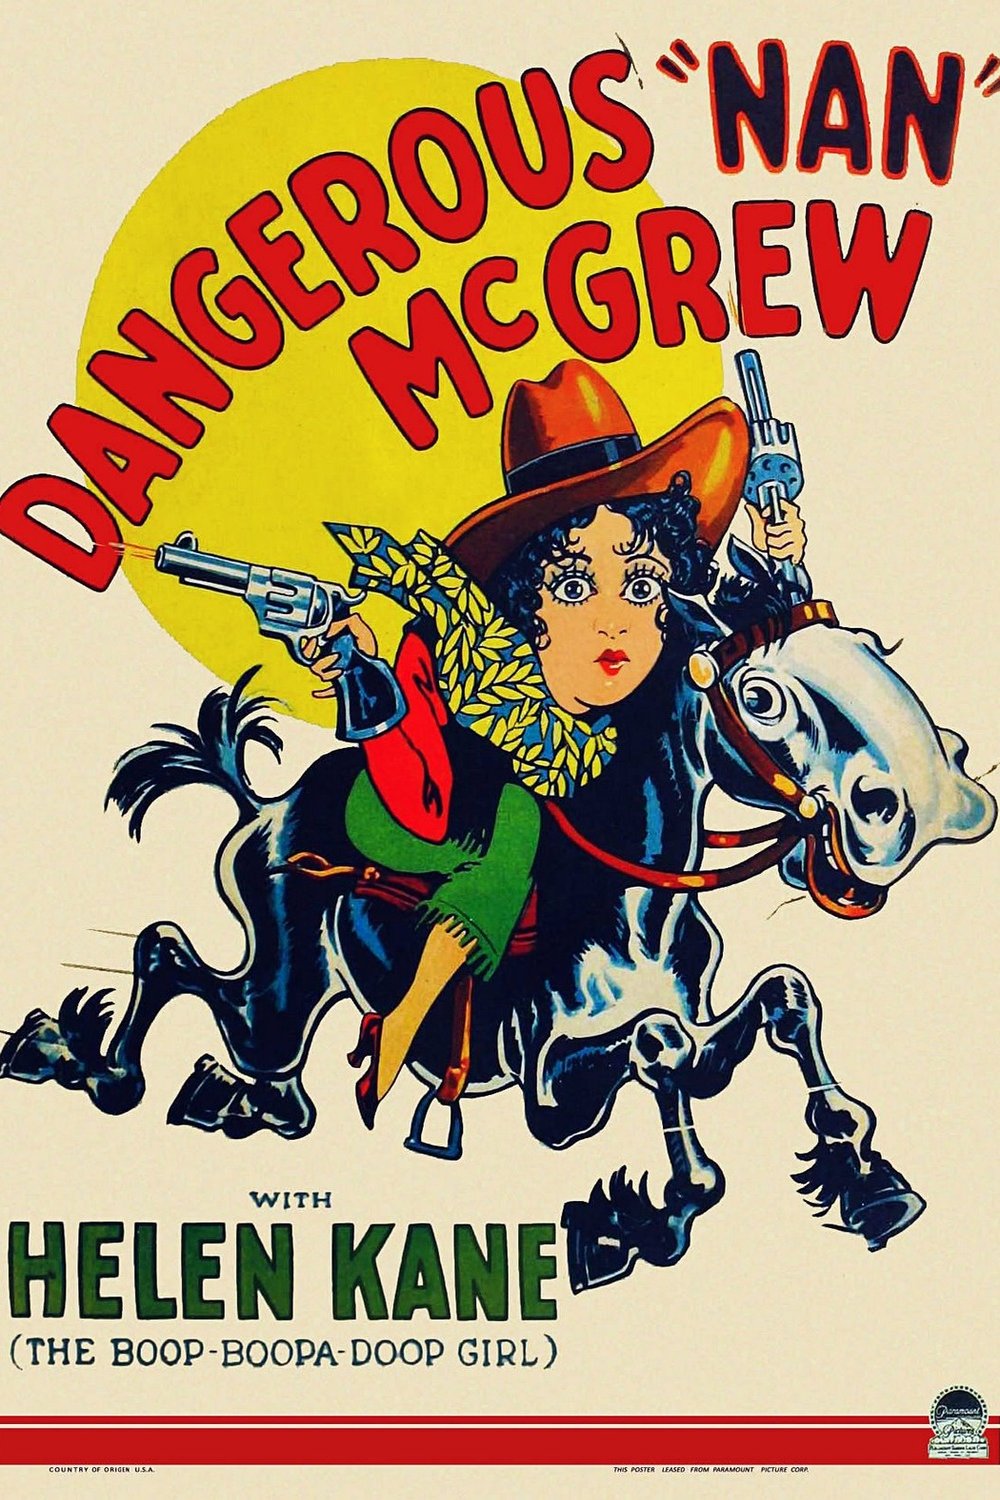 Poster of the movie Dangerous Nan McGrew